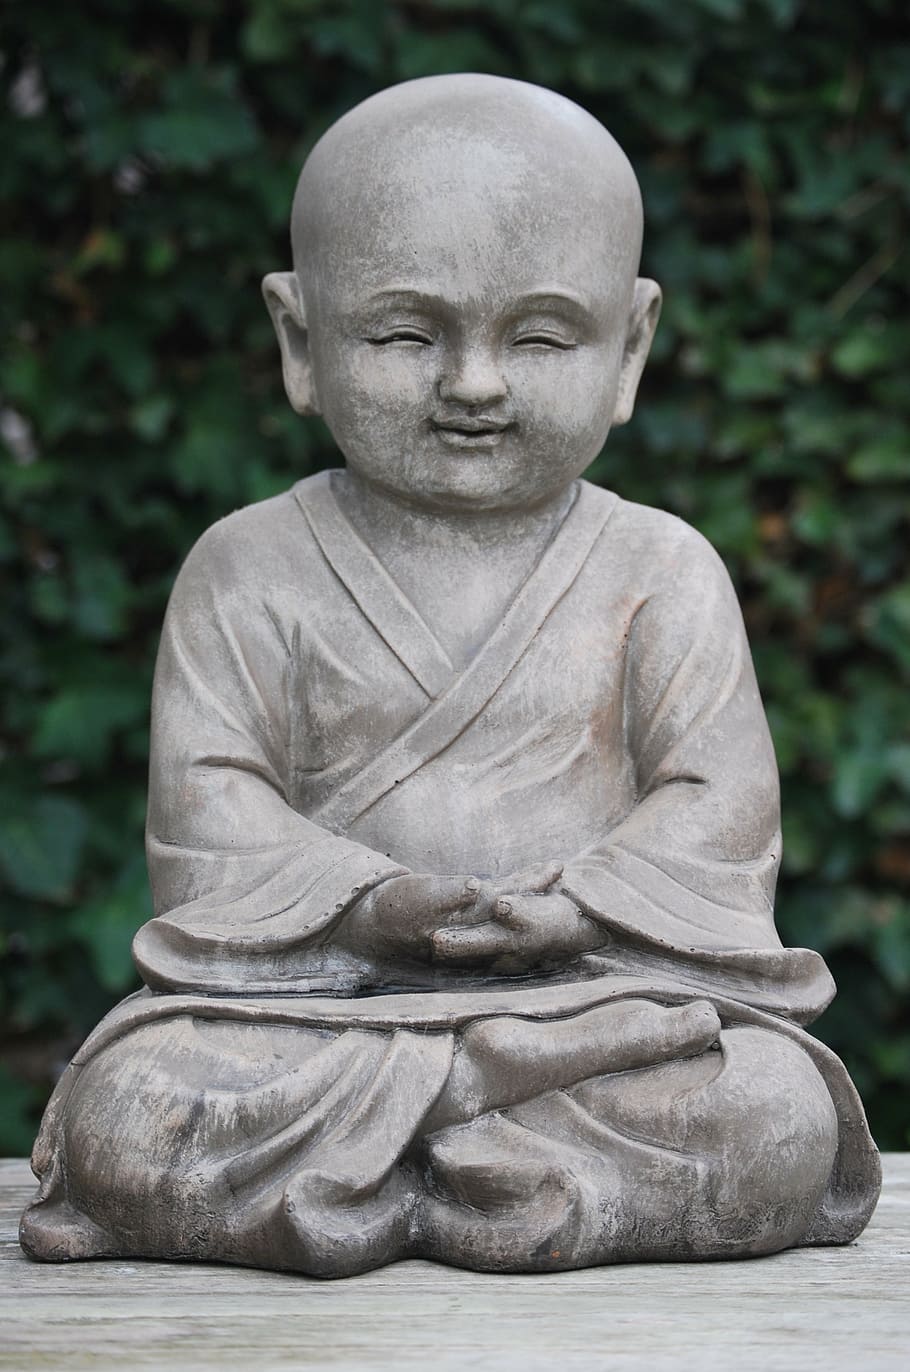 Burmese Bronze Buddha Statue Meditation Pose Buddhism Buddhist Art | eBay